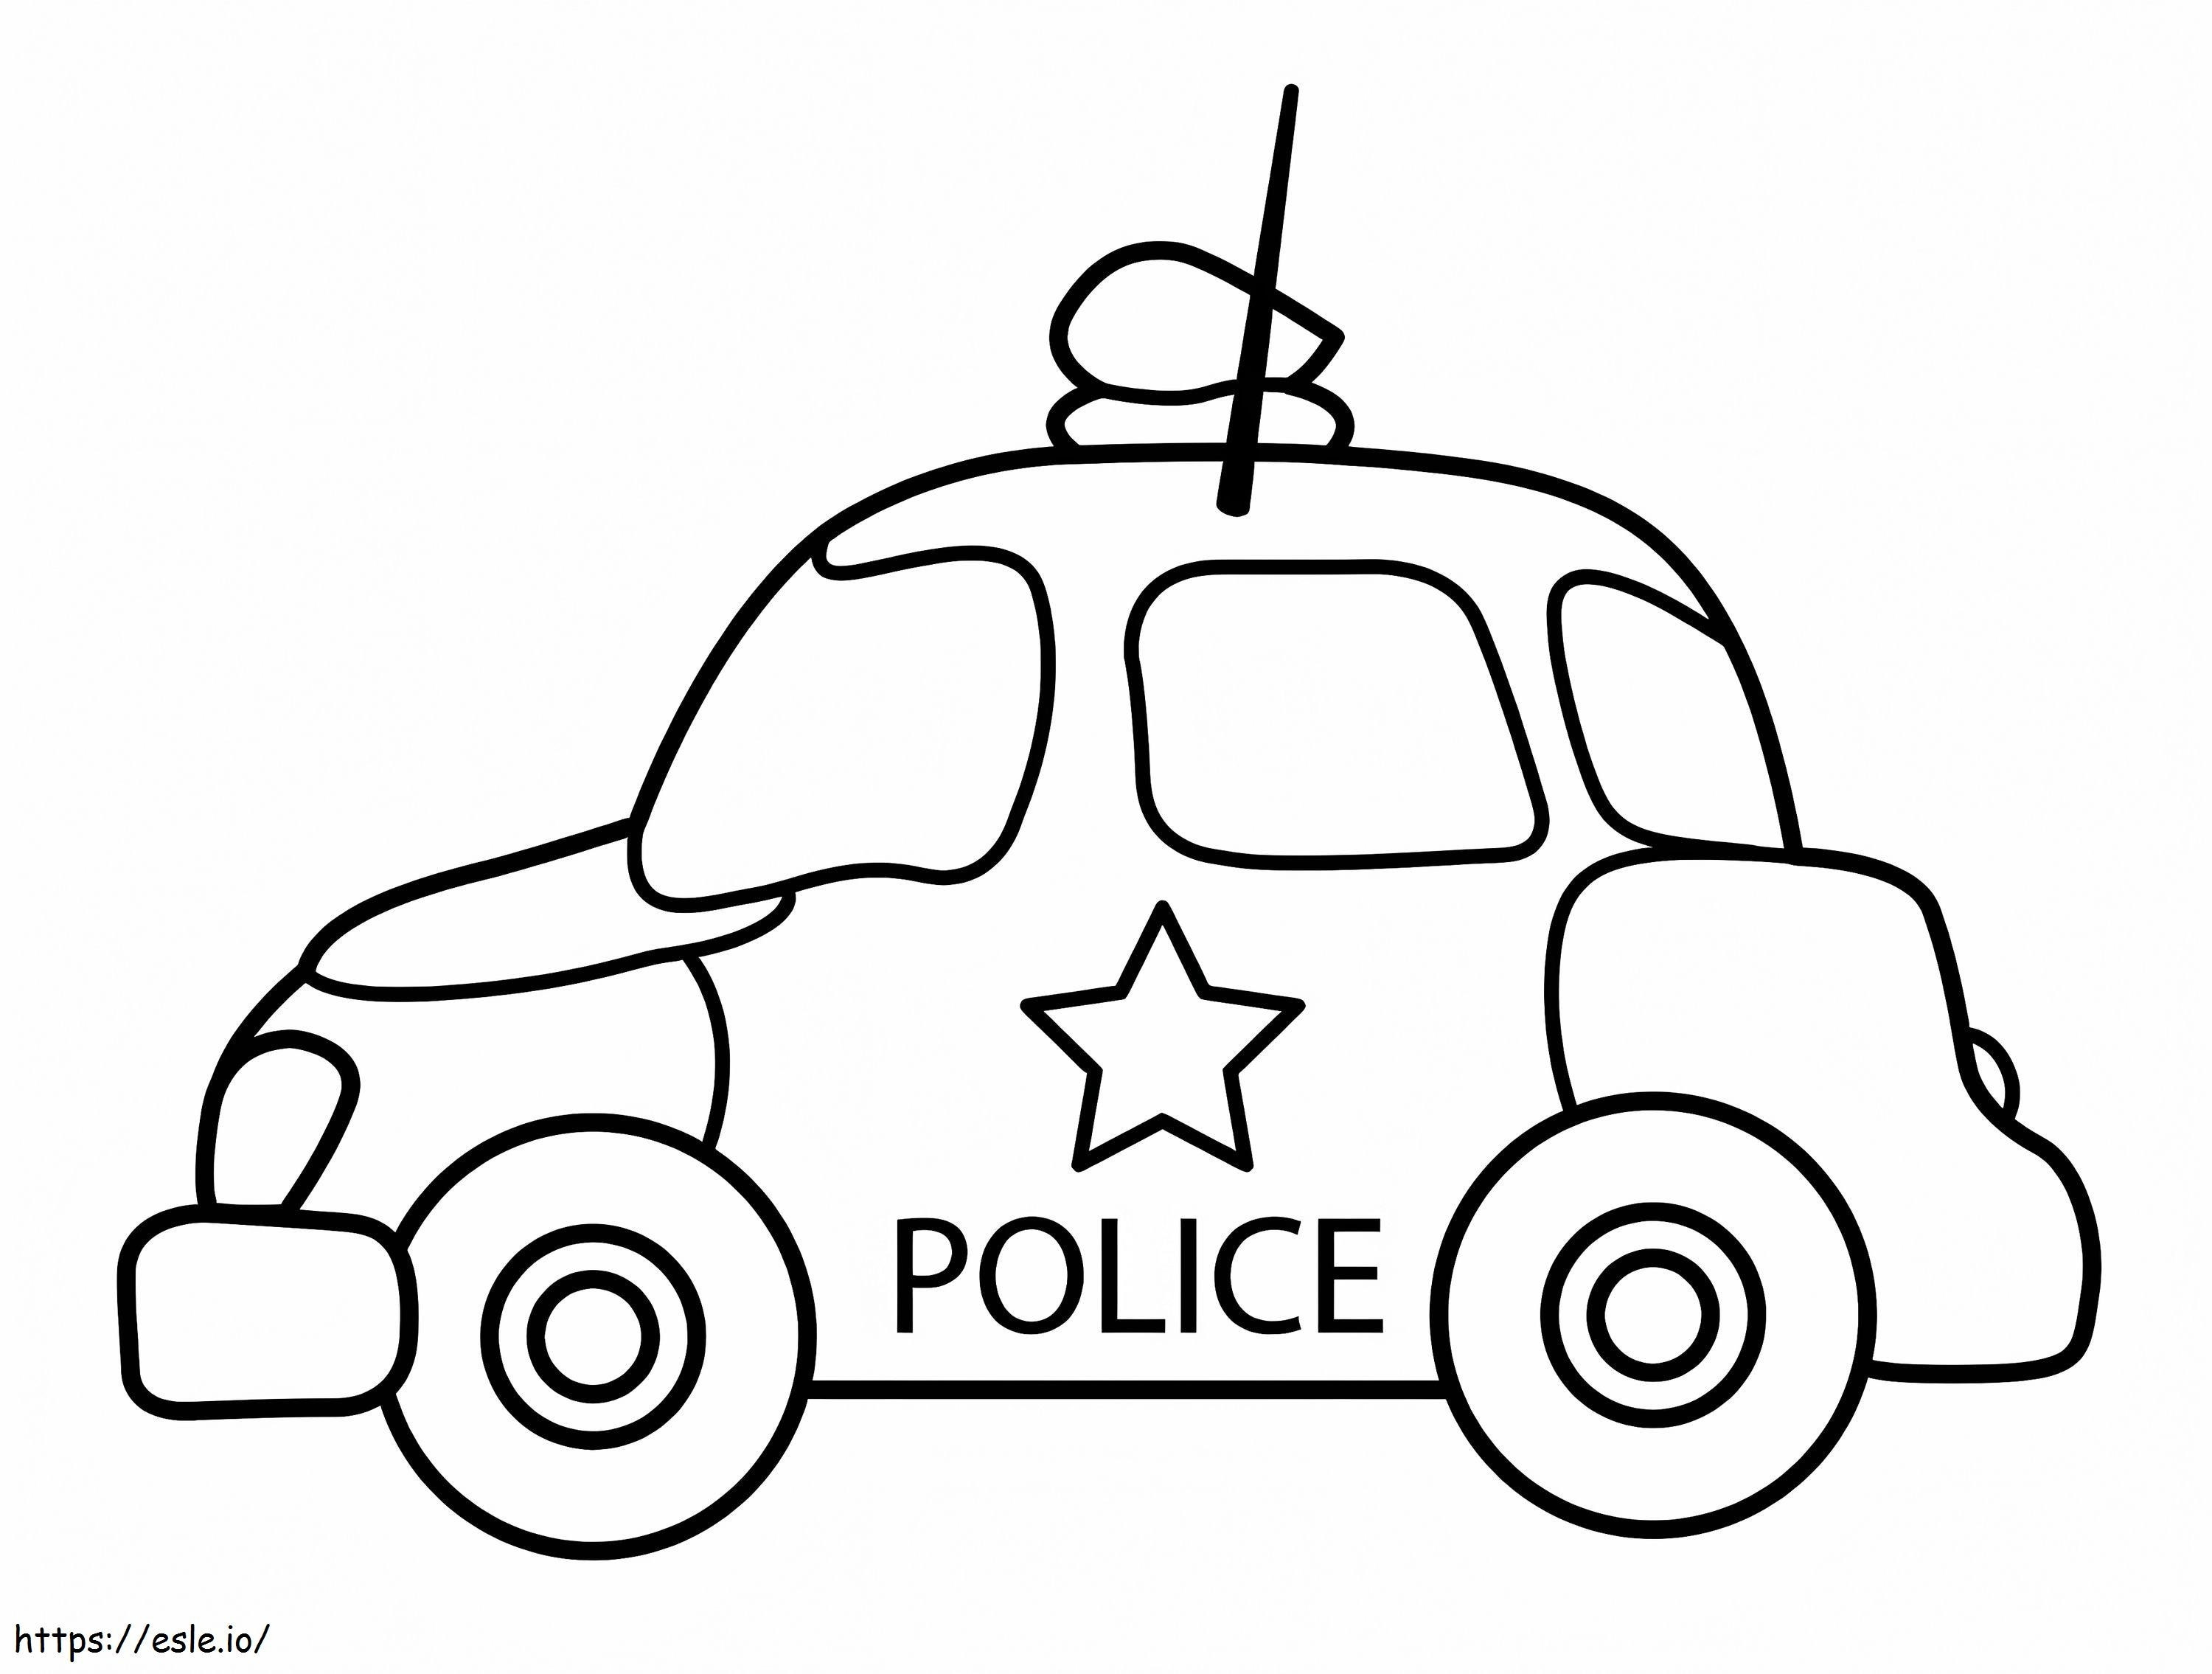 Adorable Police Car coloring page